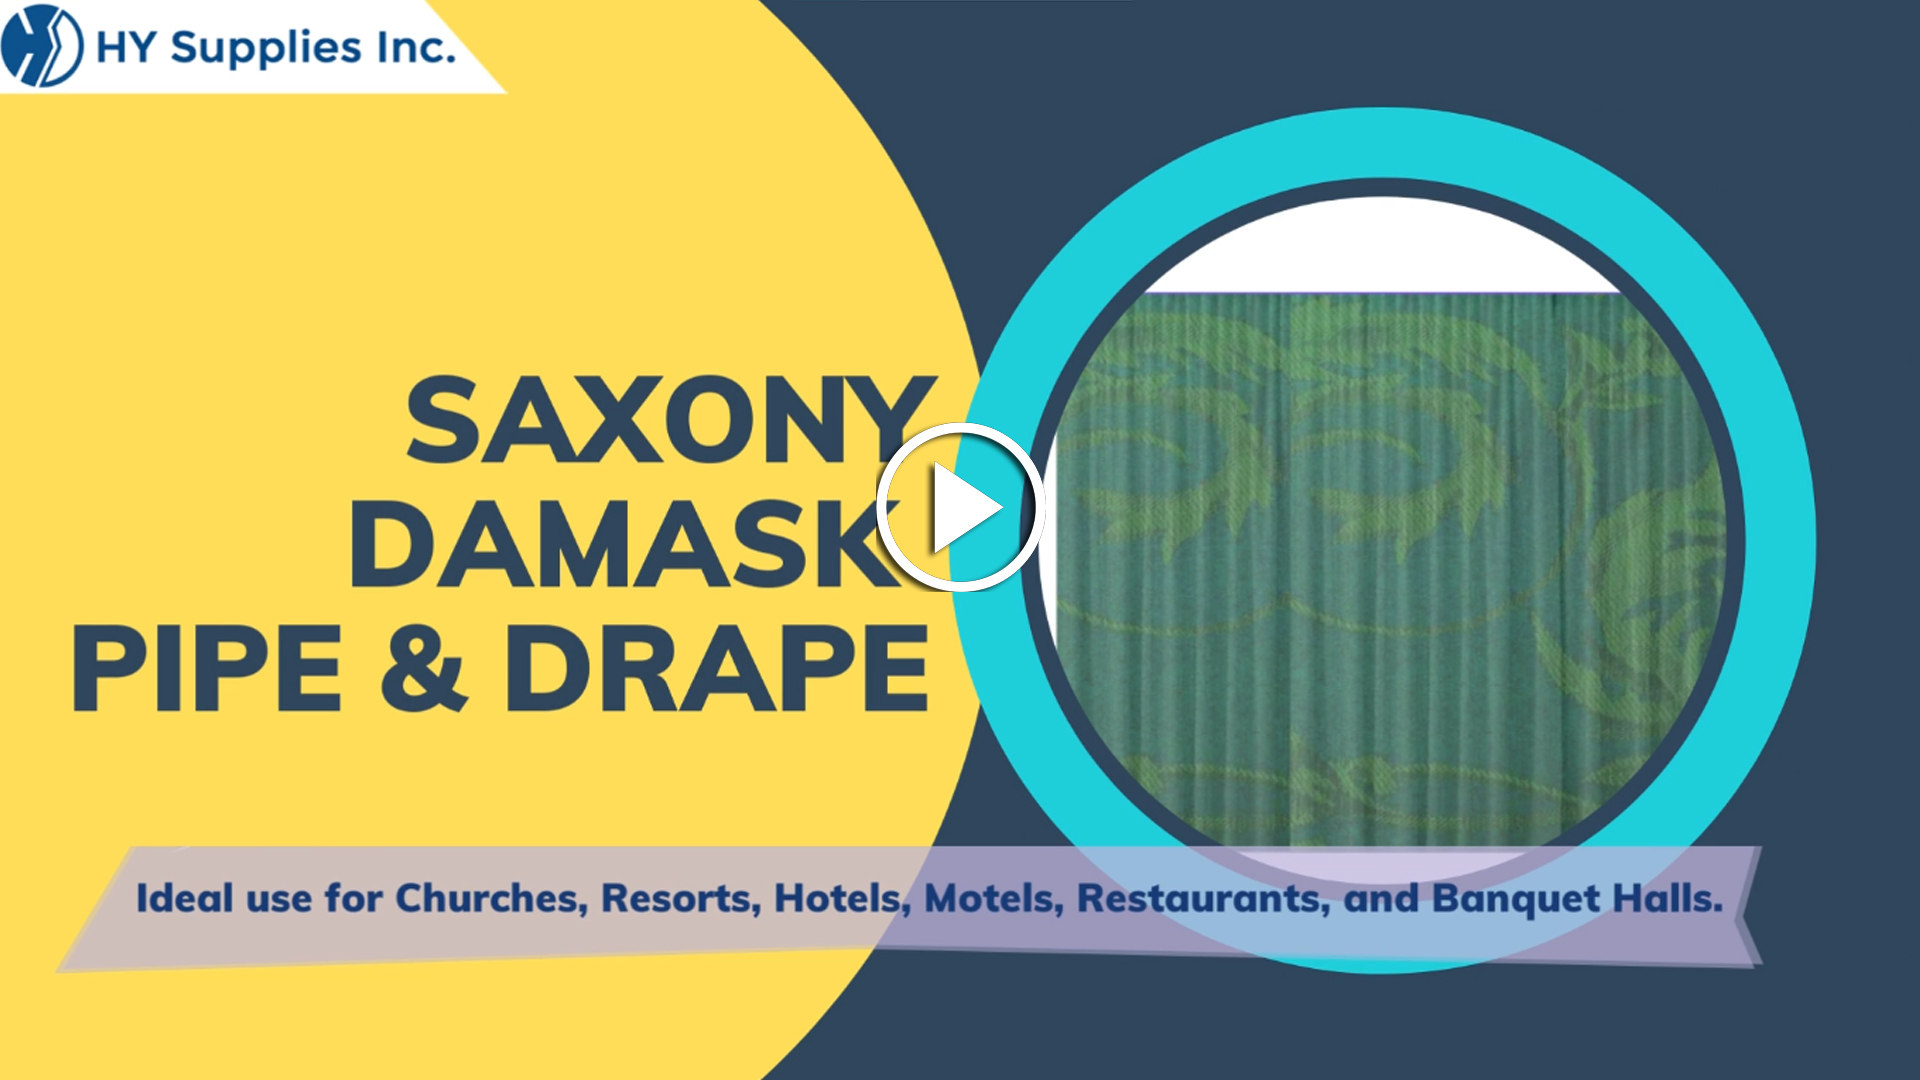 Saxony Damask Pipe & Drape